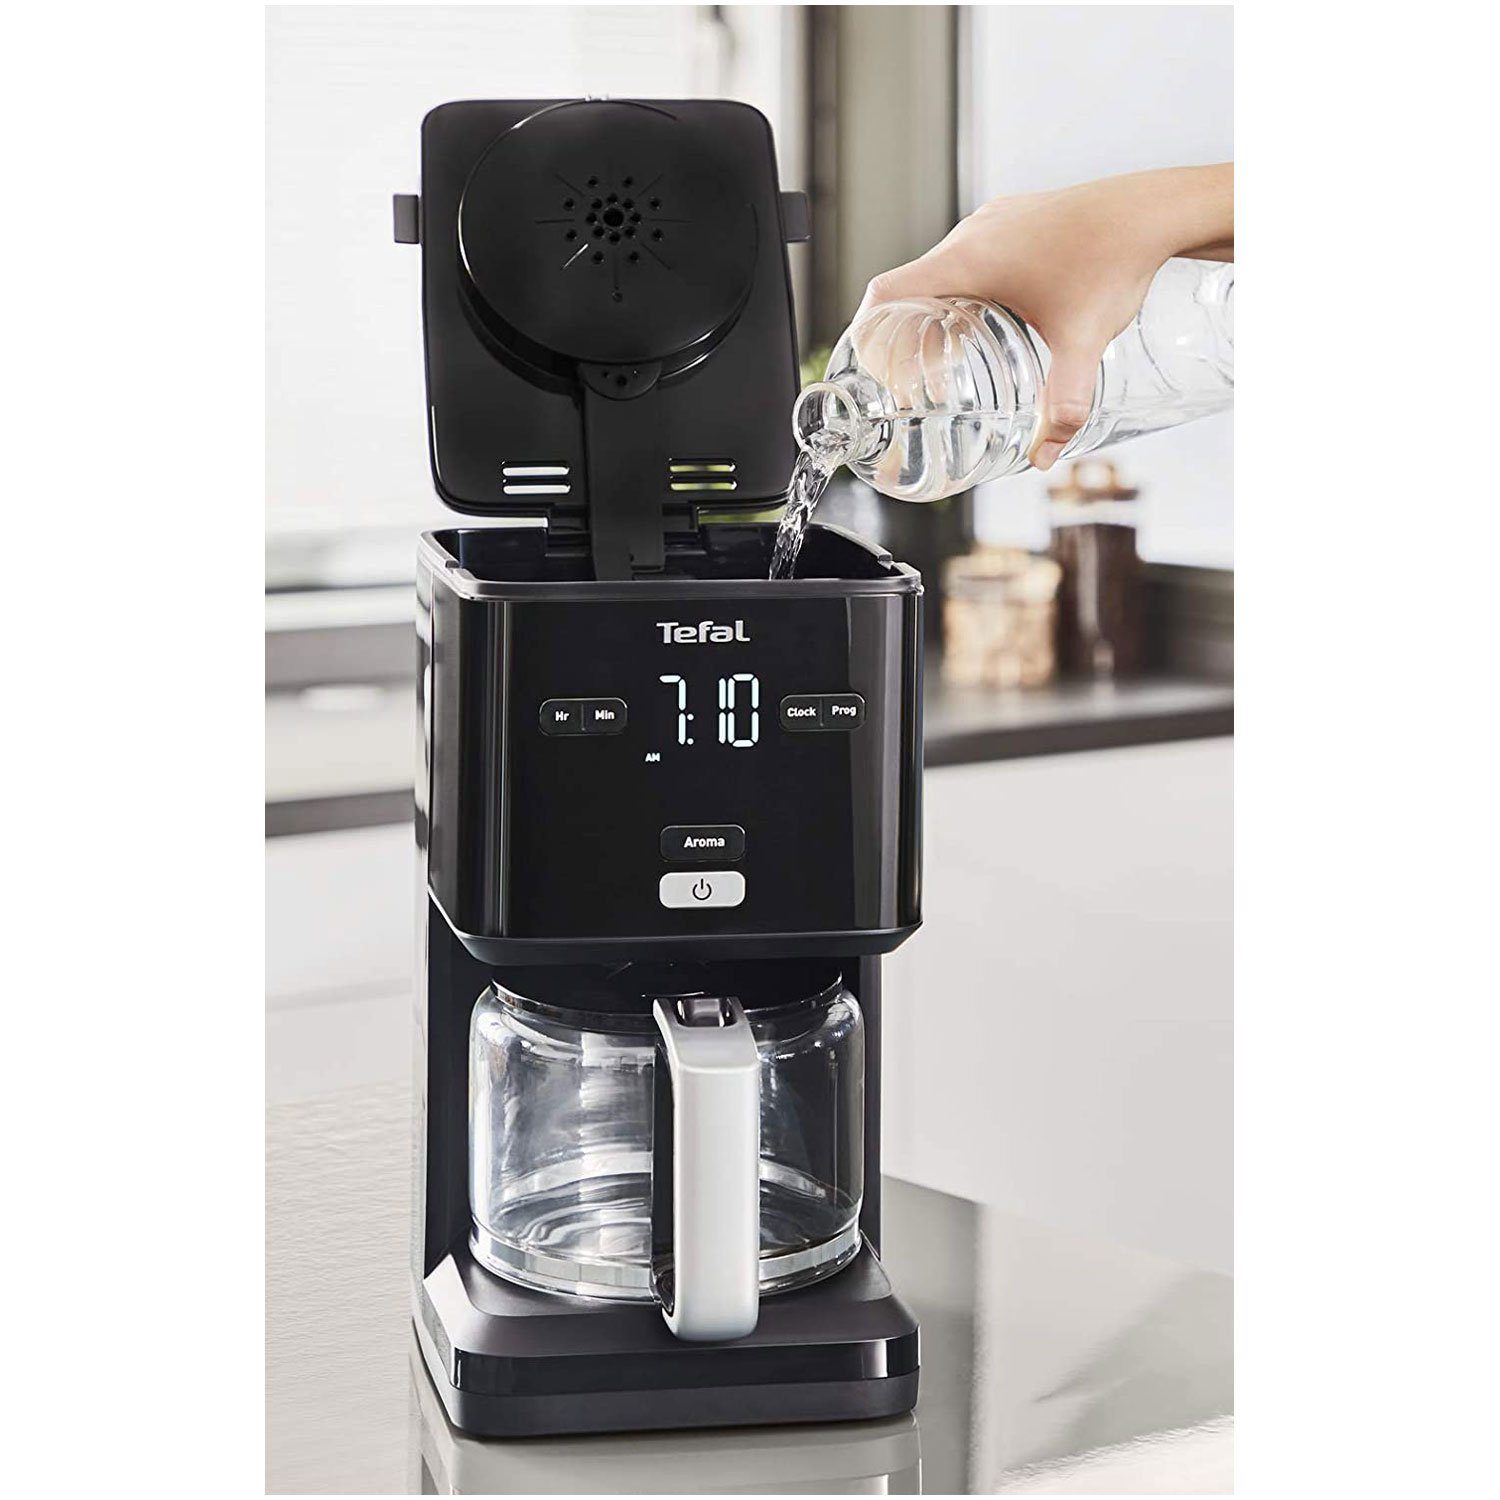 Kaffeekanne, Aroma-Funktion, Tefal 1.25l CM600810, Warmhalte-Funktion Digitales LCD-Display, Filterkaffeemaschine 24h-Timer,